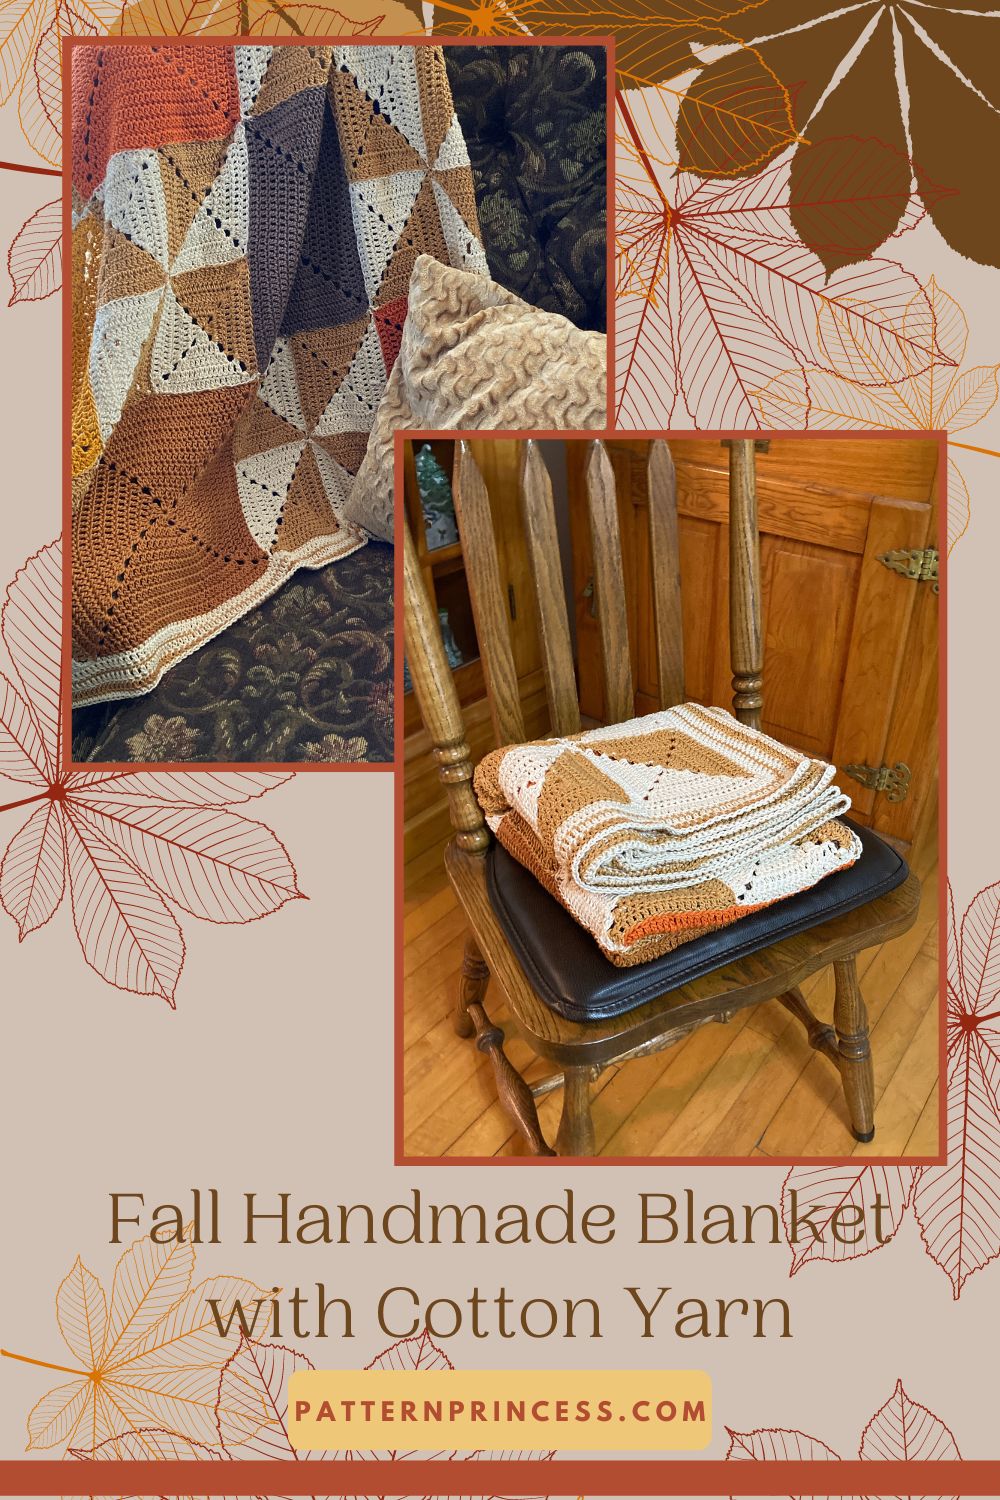 Fall Handmade Blanket with Cotton Yarn